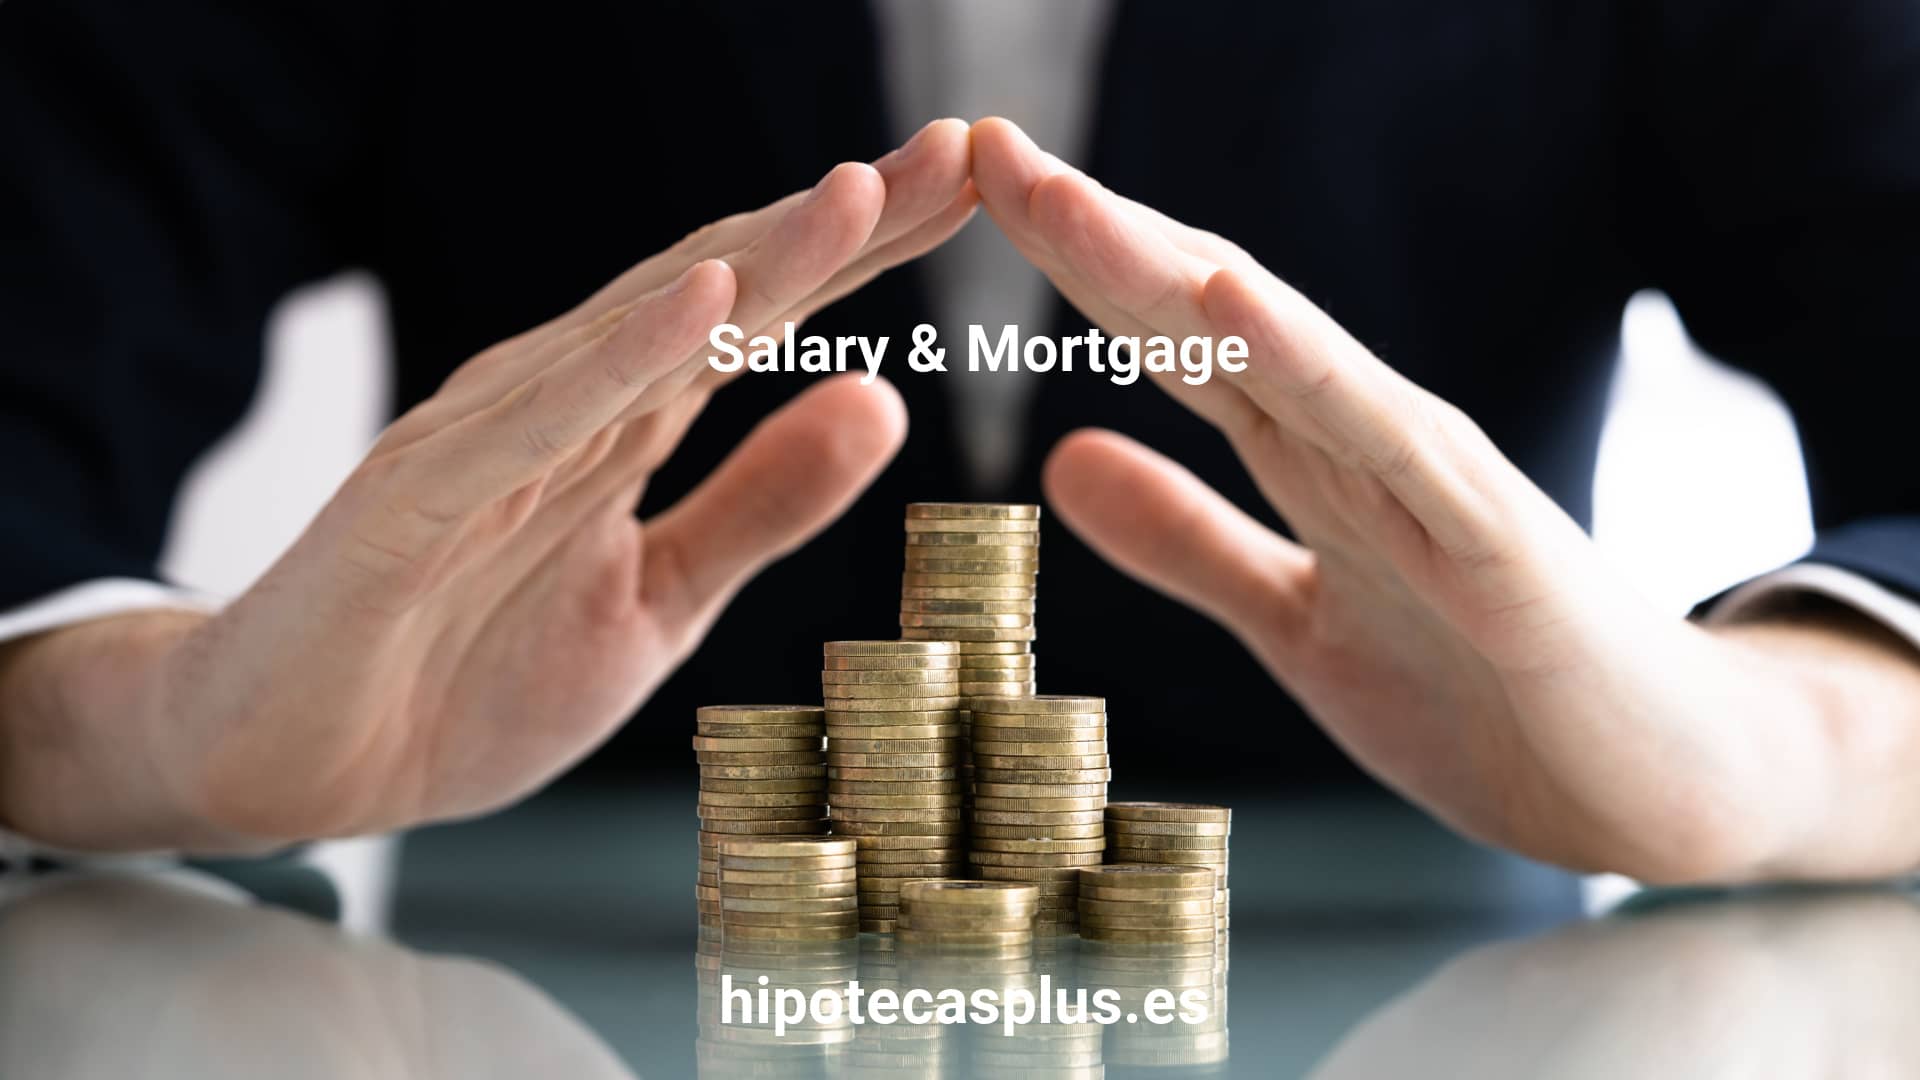 https://www.hipotecasplus.es/wp-content/uploads/HipotecasPlus-Salary-Mortgage-.jpg